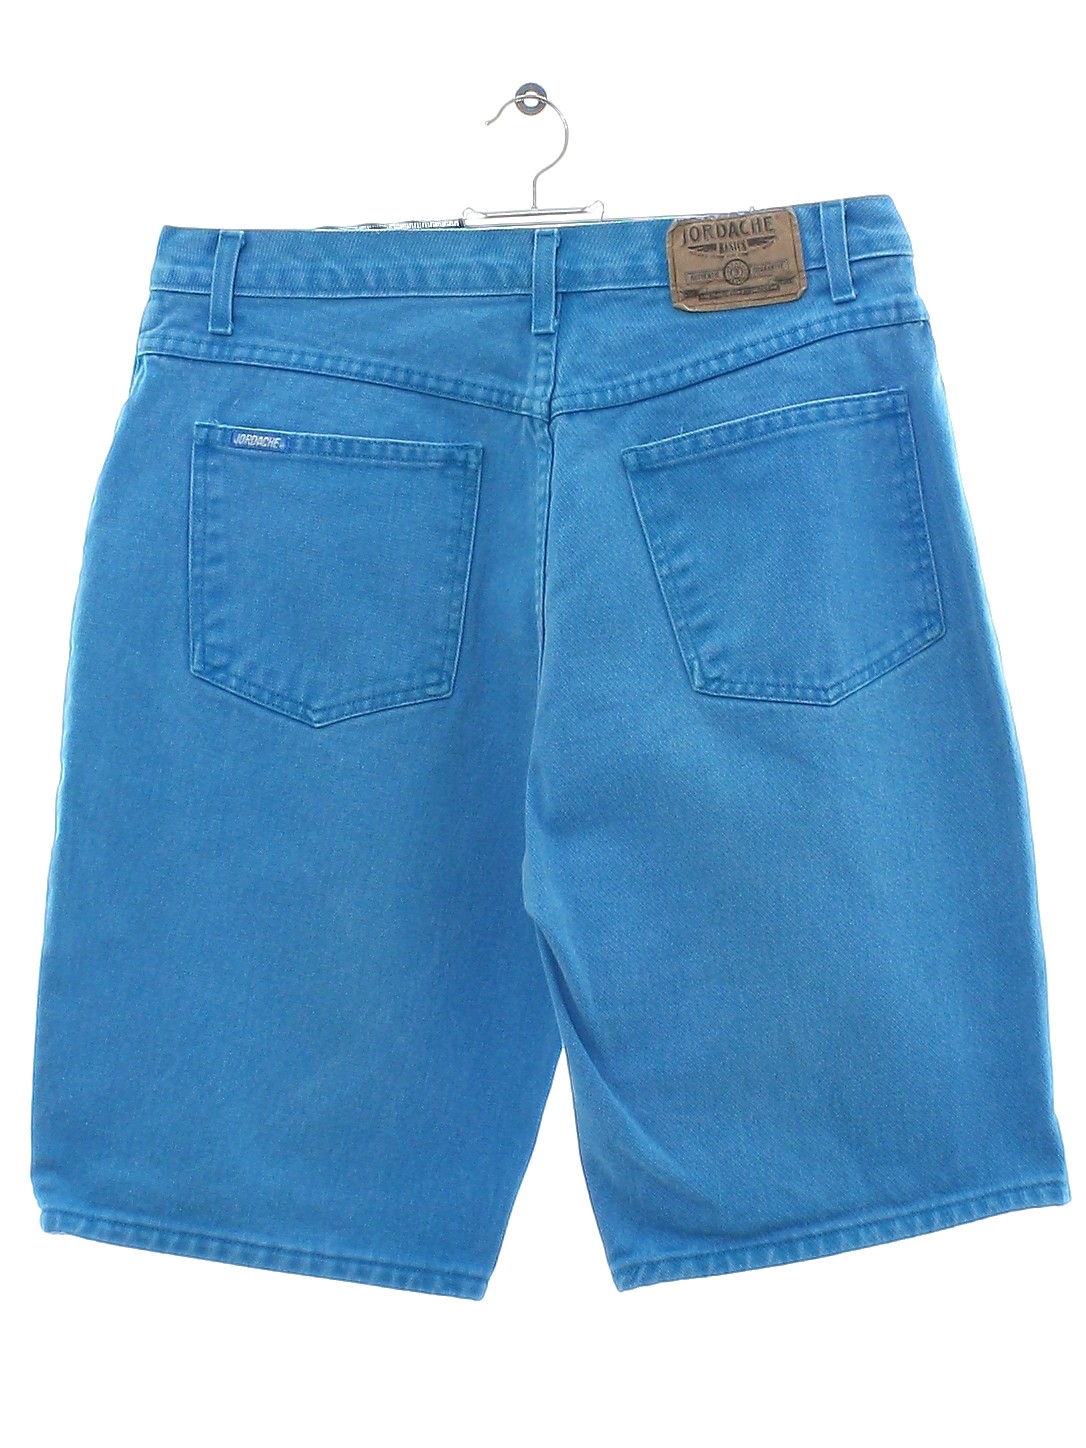 Shorts: -Jordache- Womens slightly faded tropical blue cotton denim ...